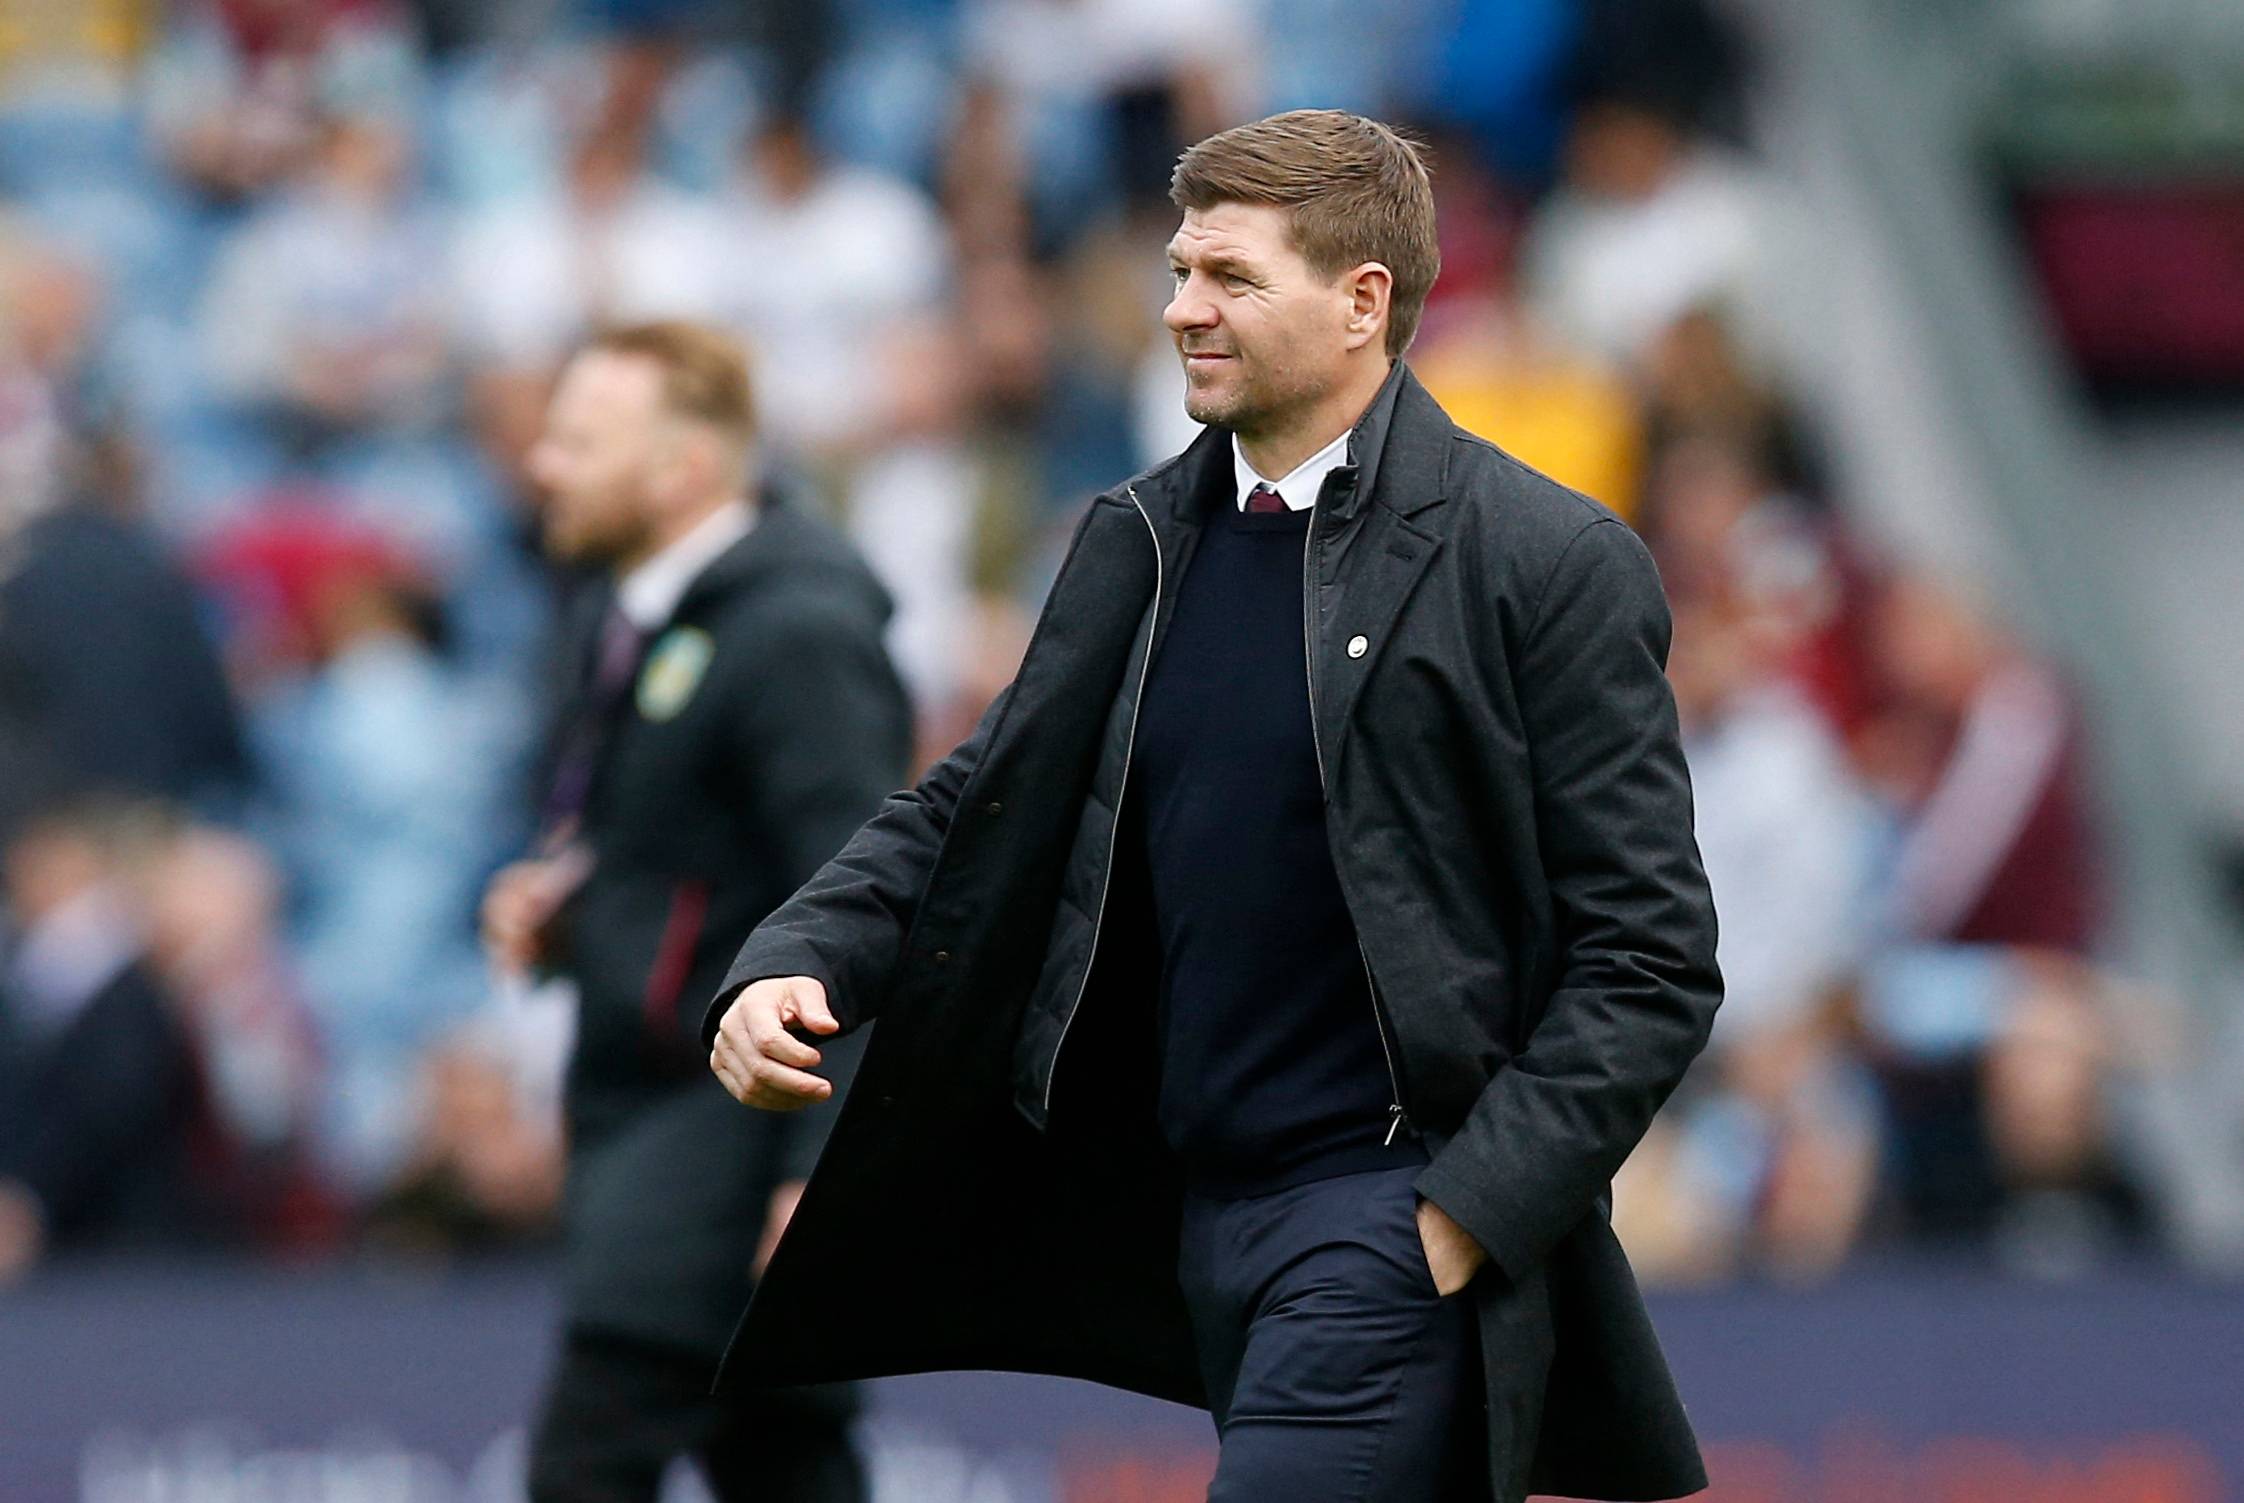 Steven Gerrard taking charge of a Premier League game for Aston Villa